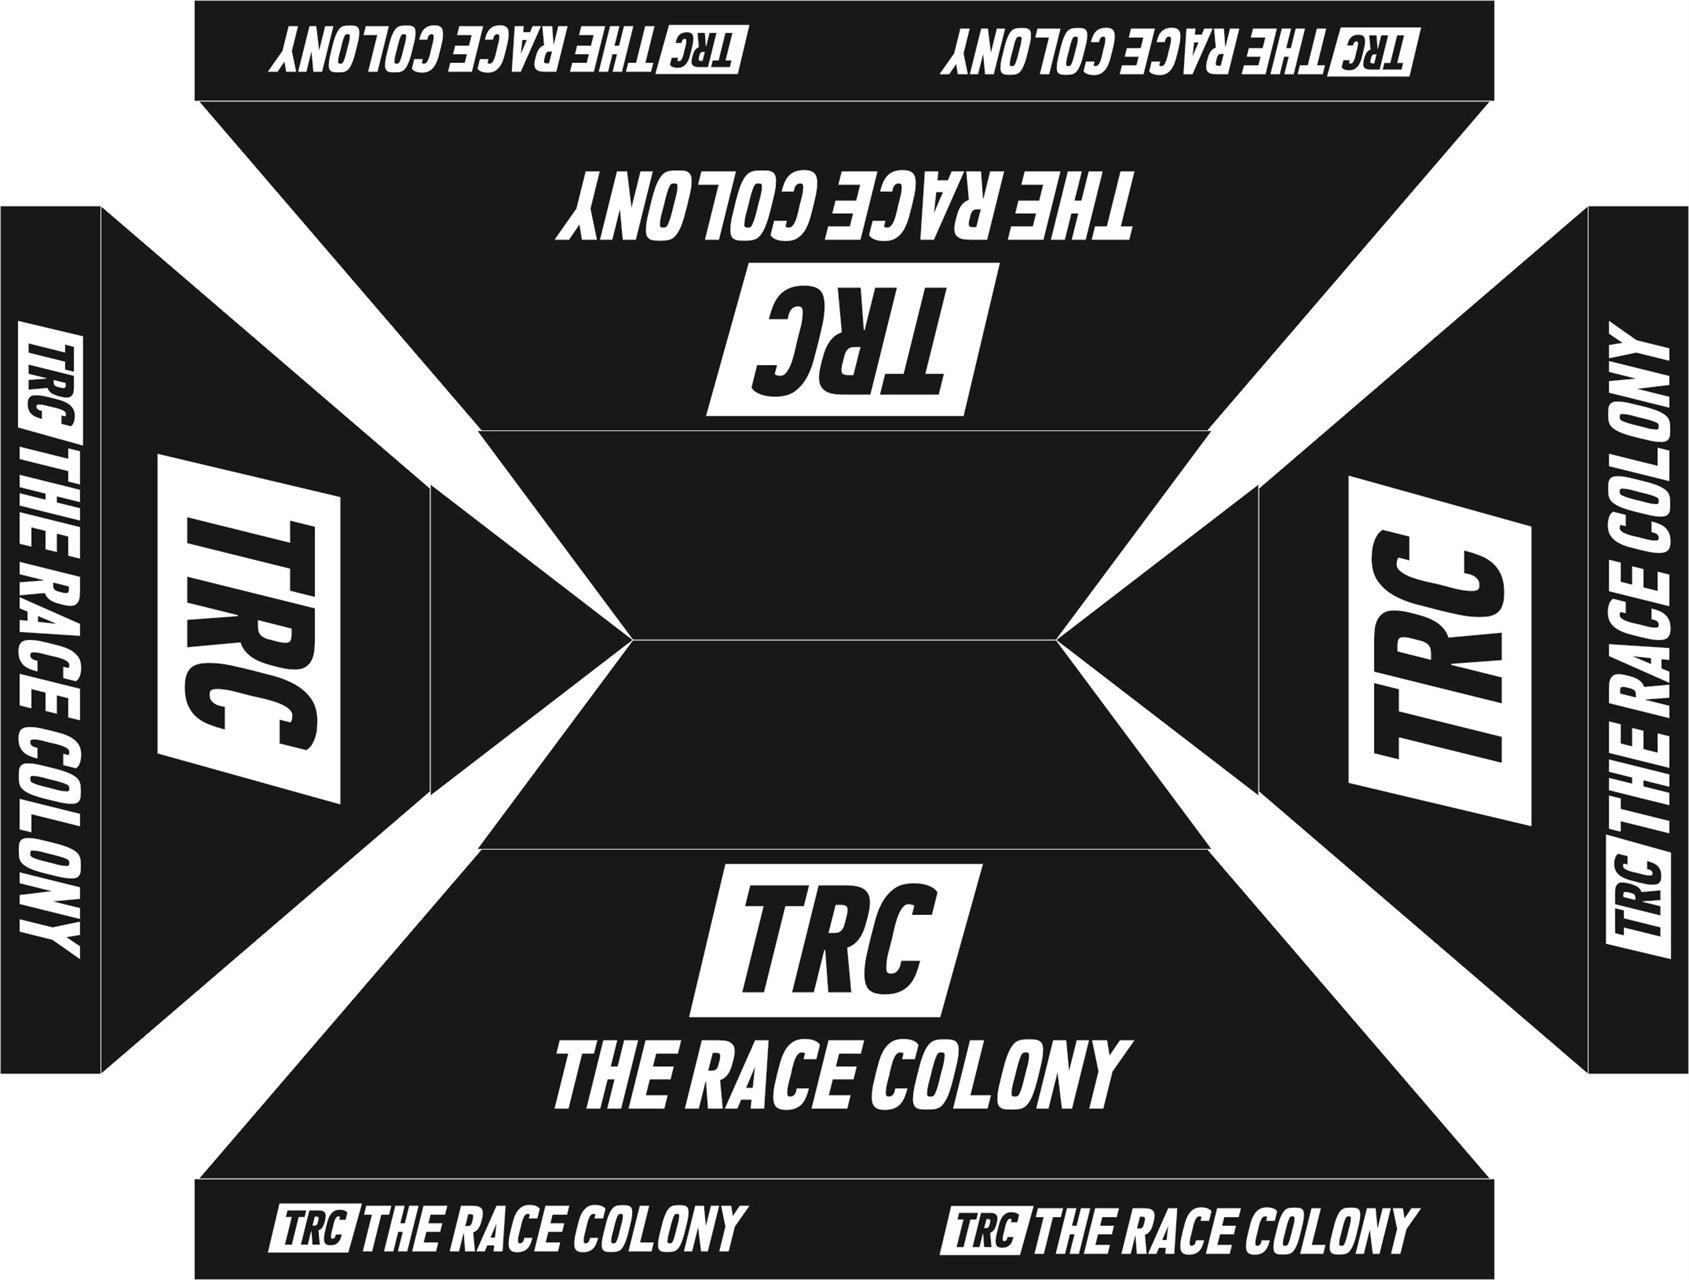 The Race Colony